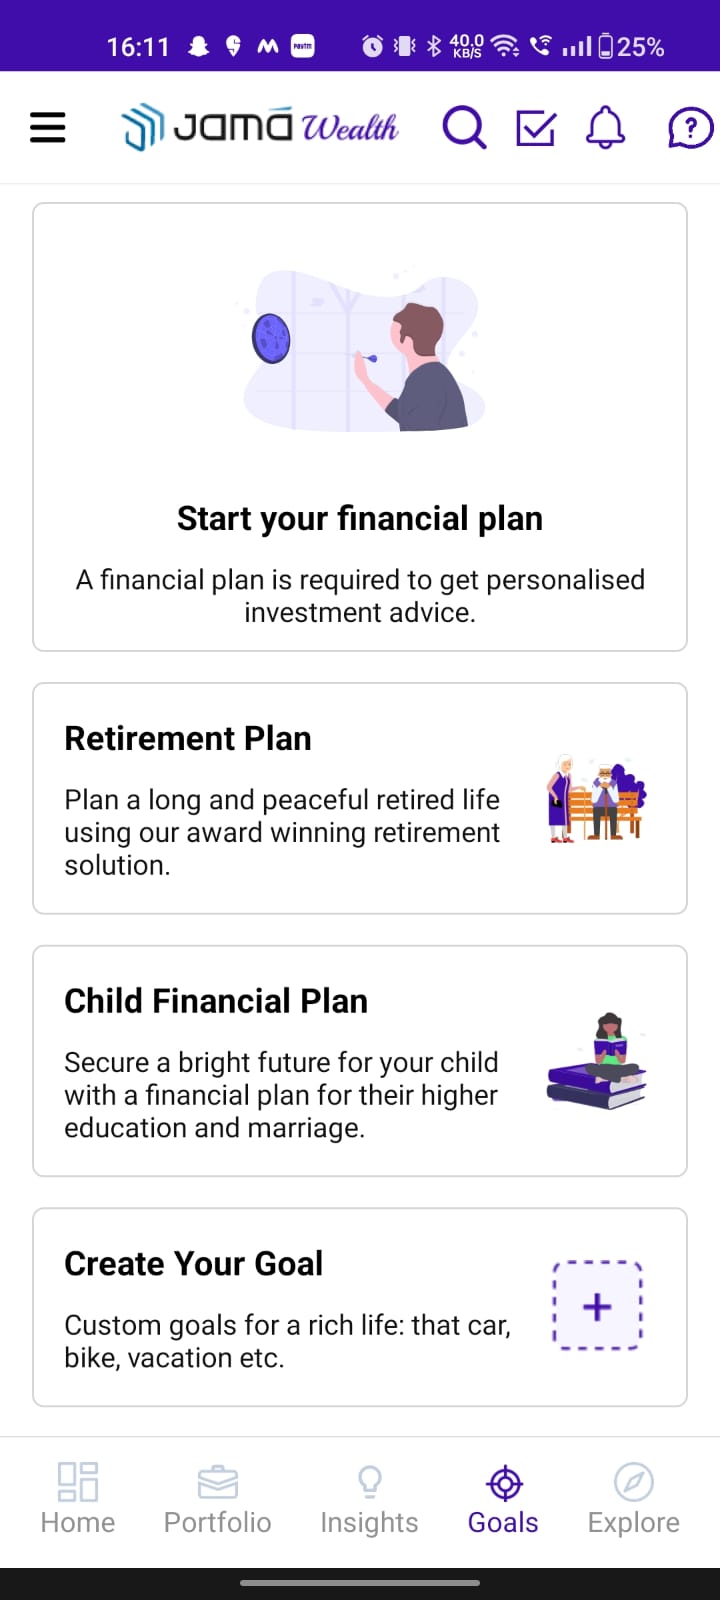 jama-wealth-comprehensive-financial-planning